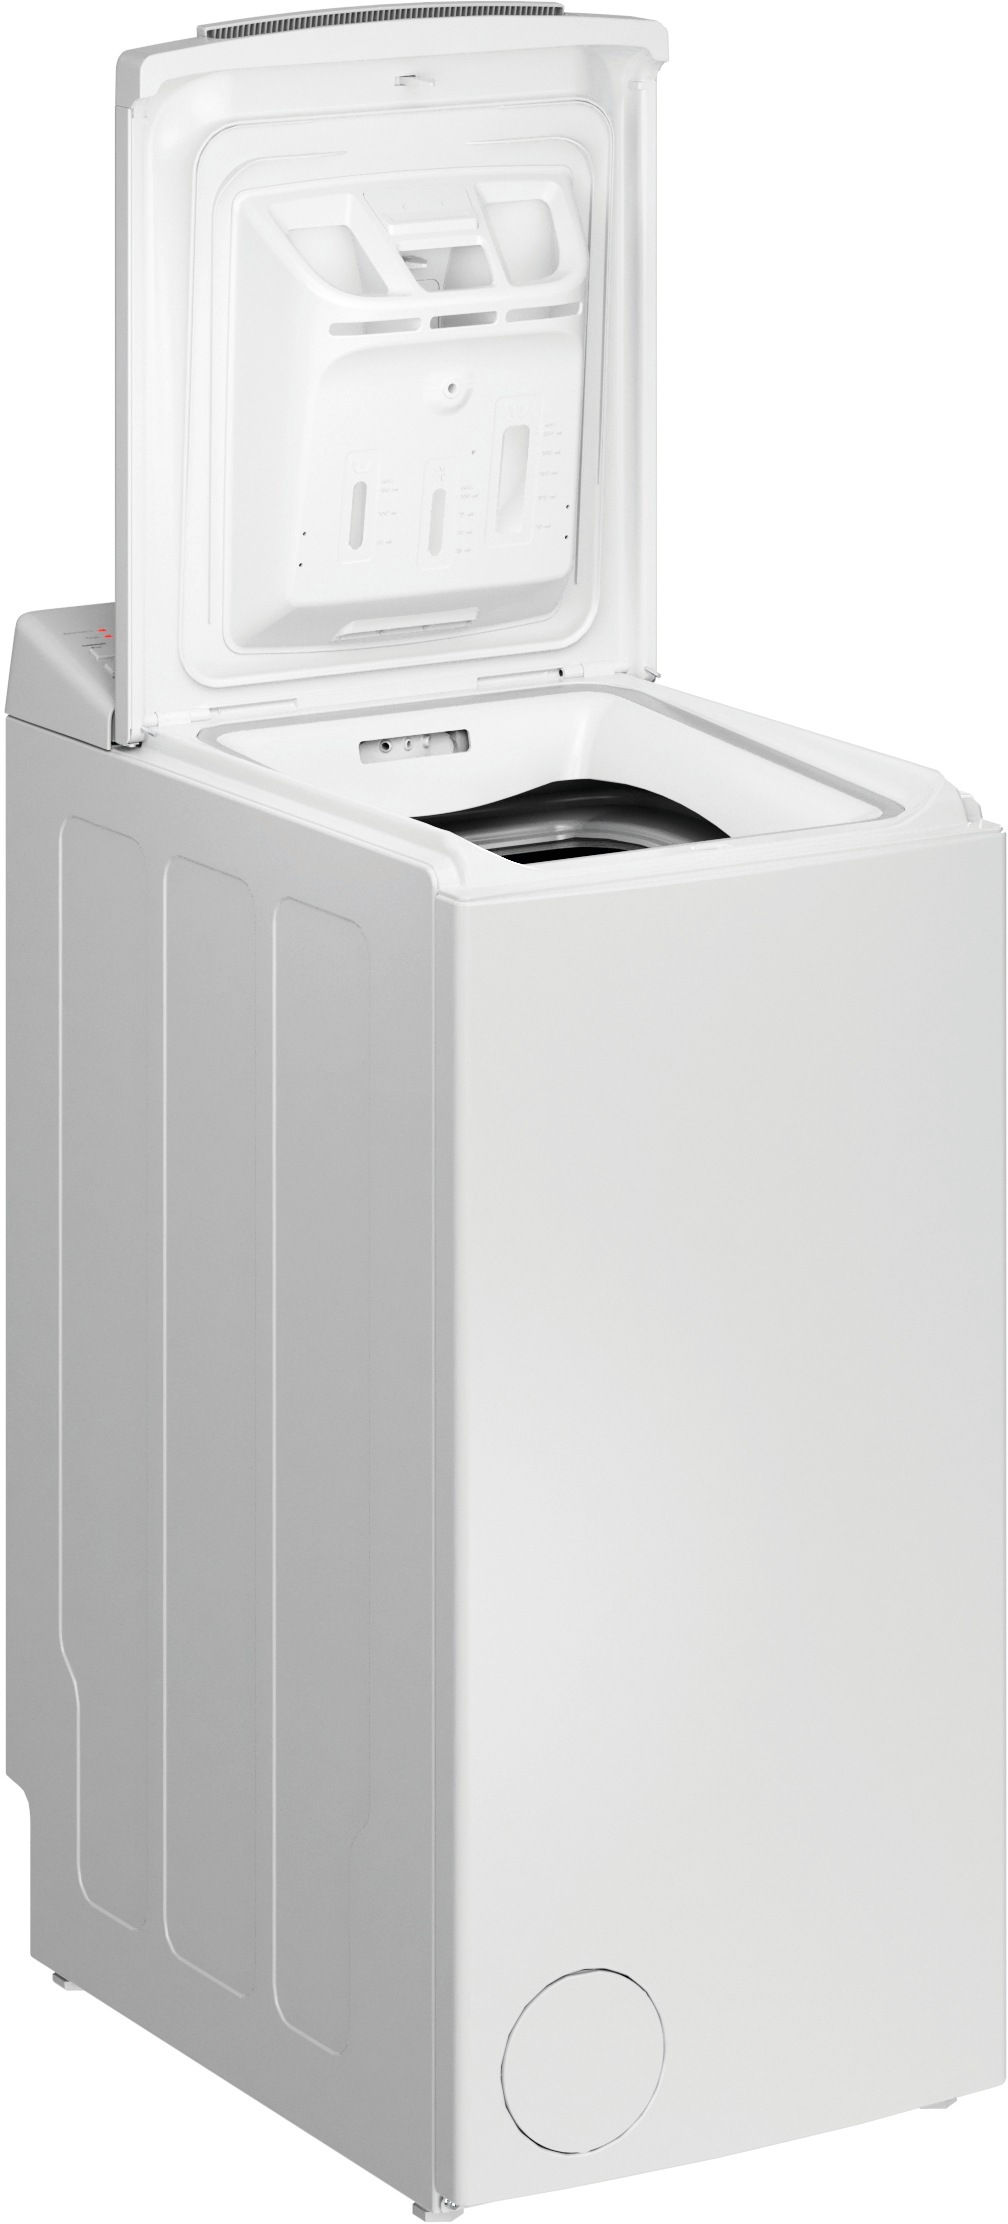 BAUKNECHT Waschmaschine Toplader "WMT Eco Star 6524 Di N", WMT Eco Star 6524 Di N, 6,5 kg, 1200 U/min